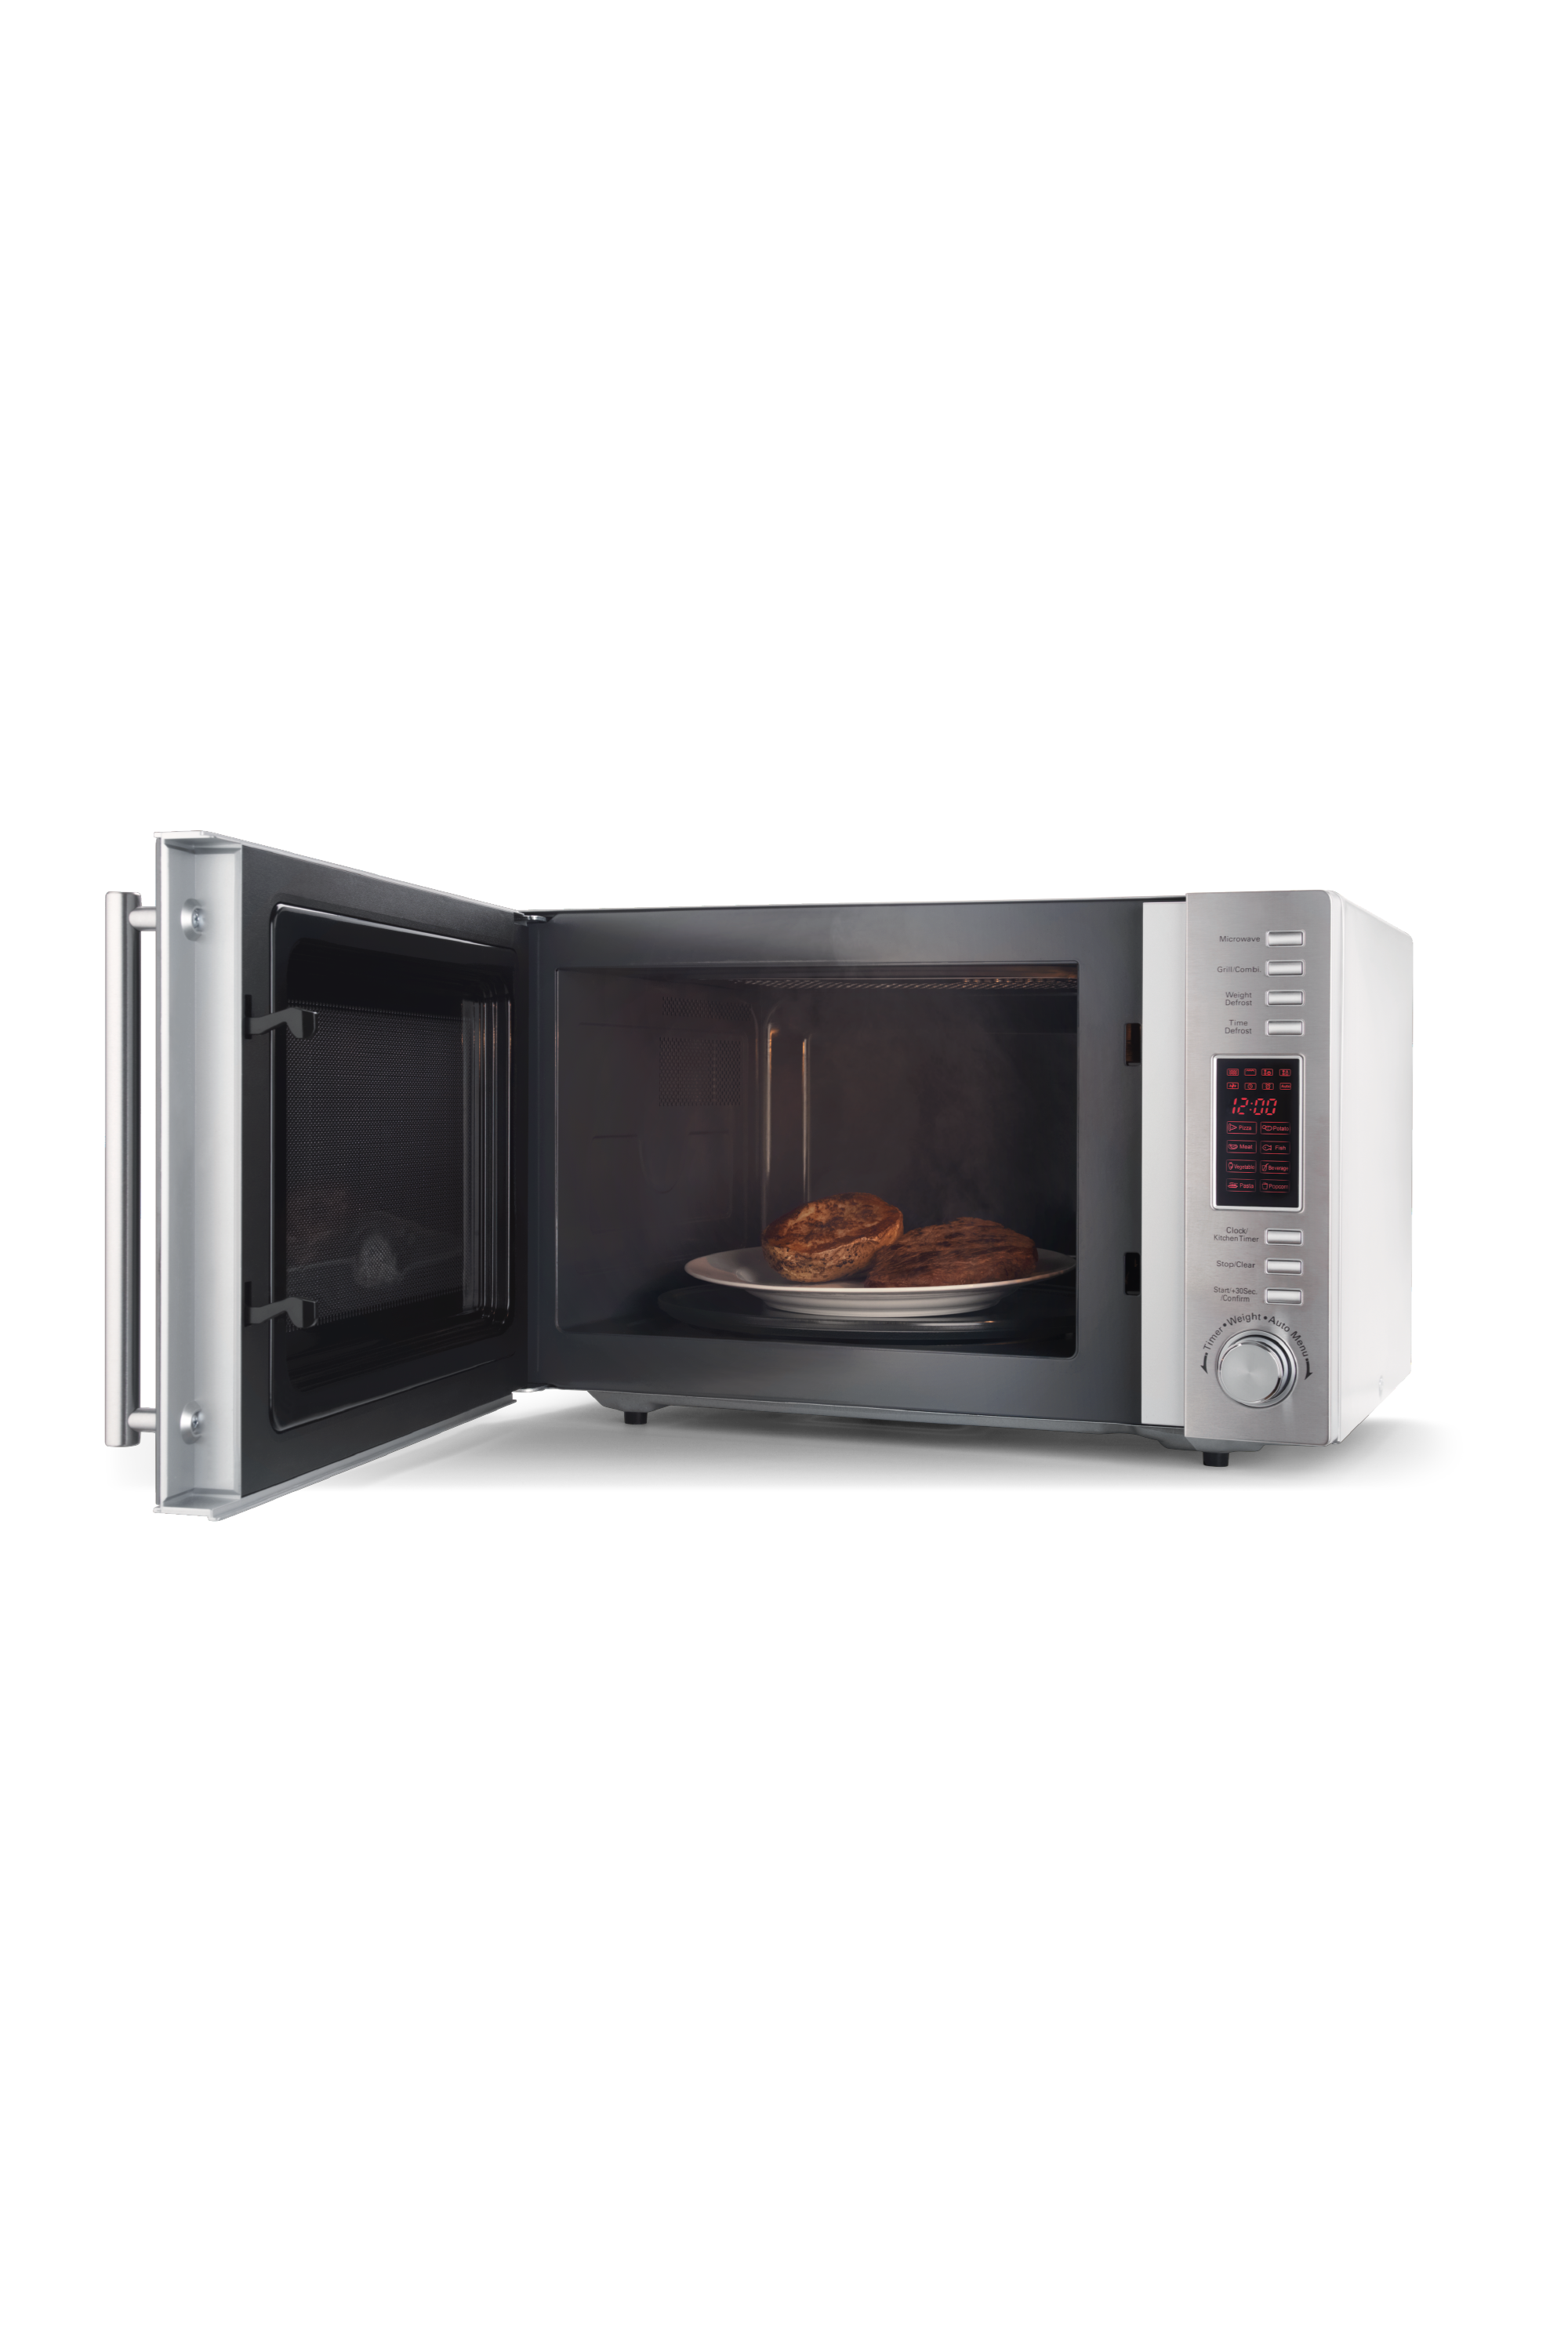 Mw1230 Microwave